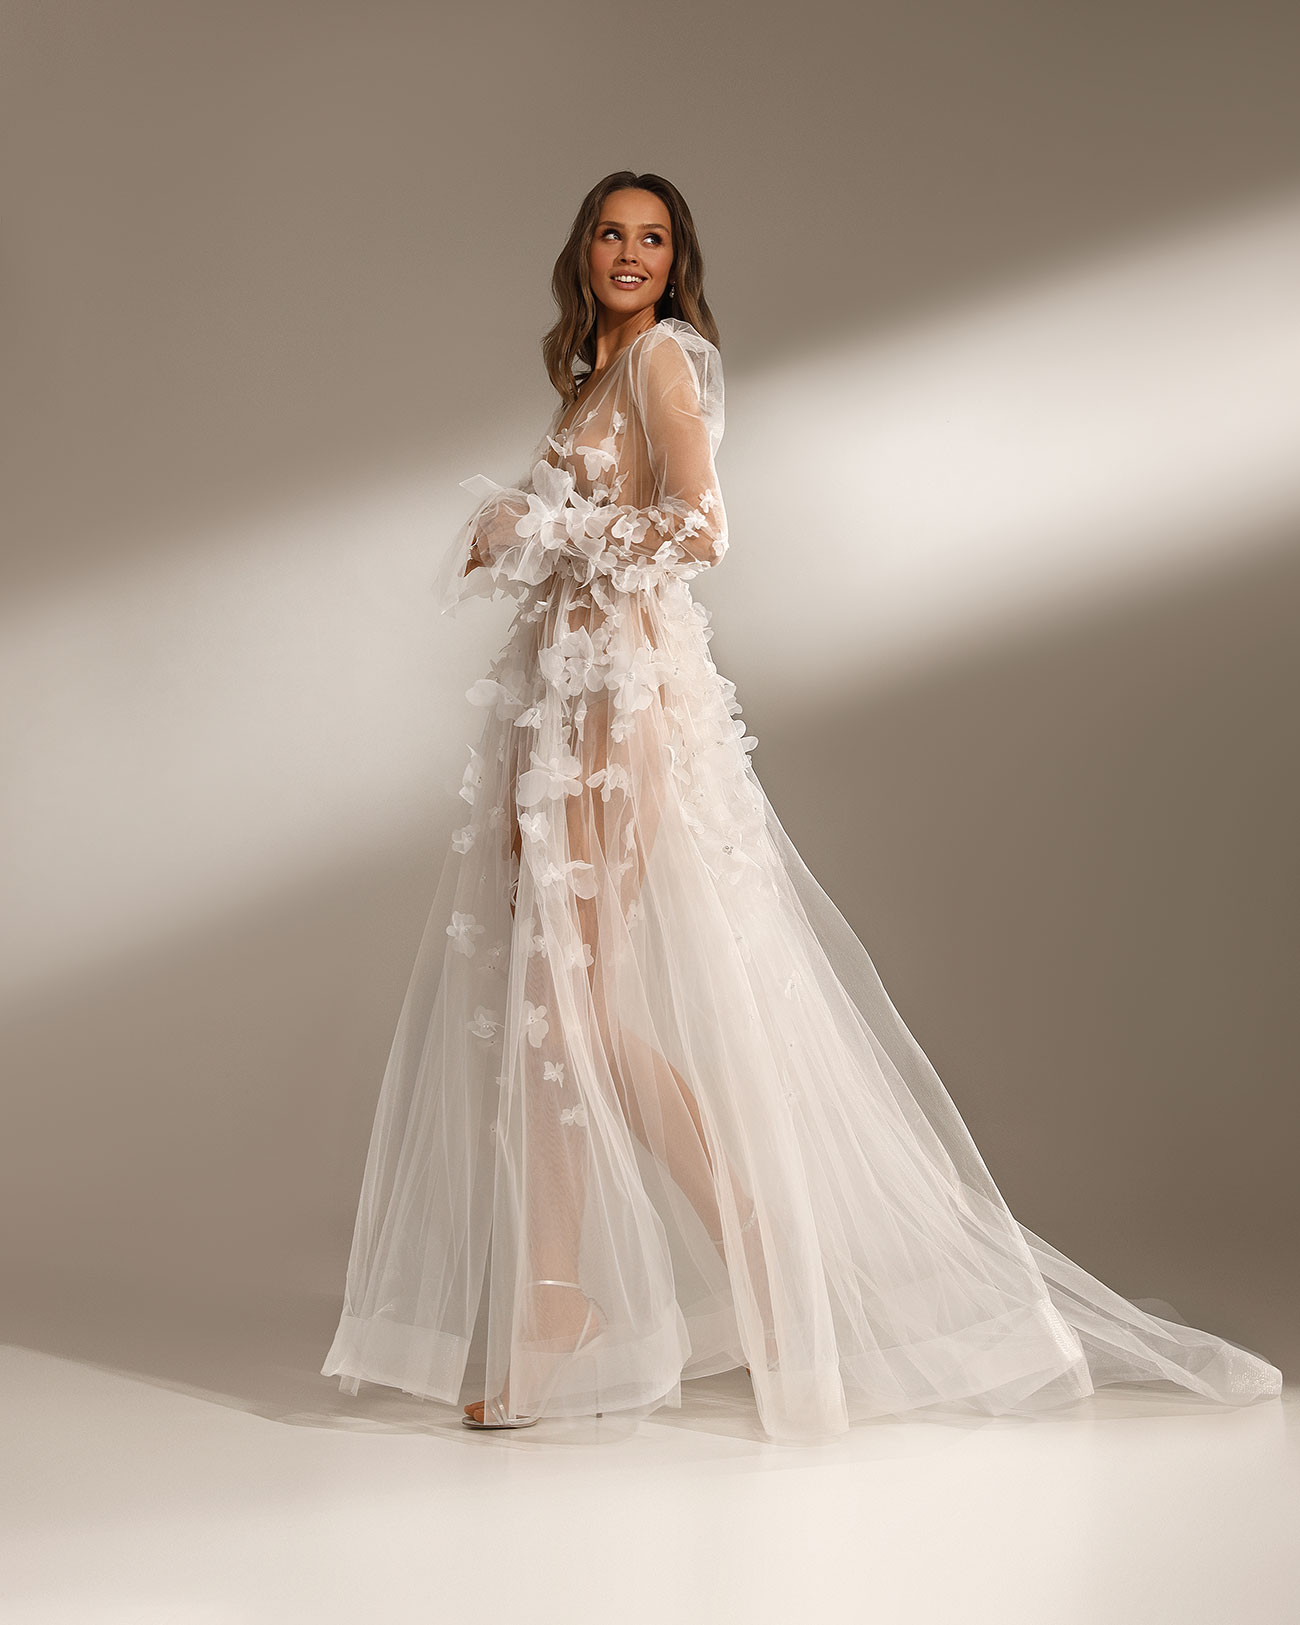 Nola Grey Luxury Bridal Wear Brides Wedding Dresses Veils6